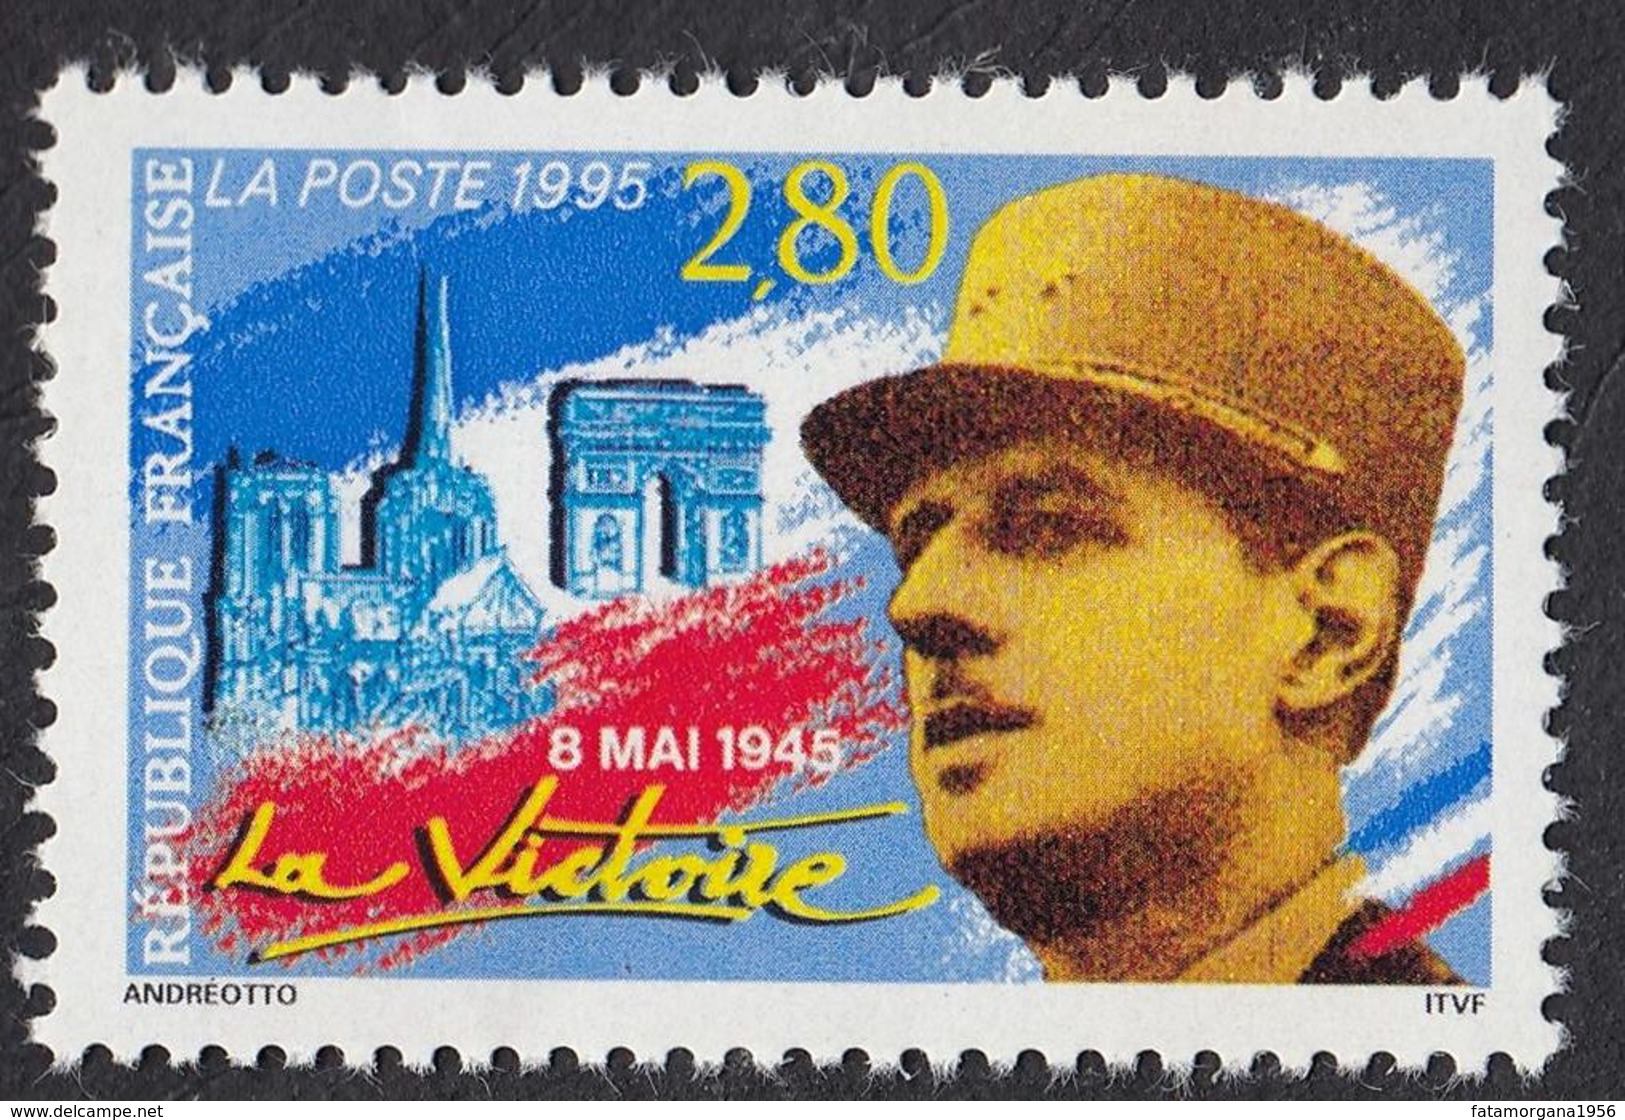 FRANCE - 1995 - Yvert 2944, 8 Mai 1945, La Victoire, 2,80 F, Neuf, Parfait. - Nuevos